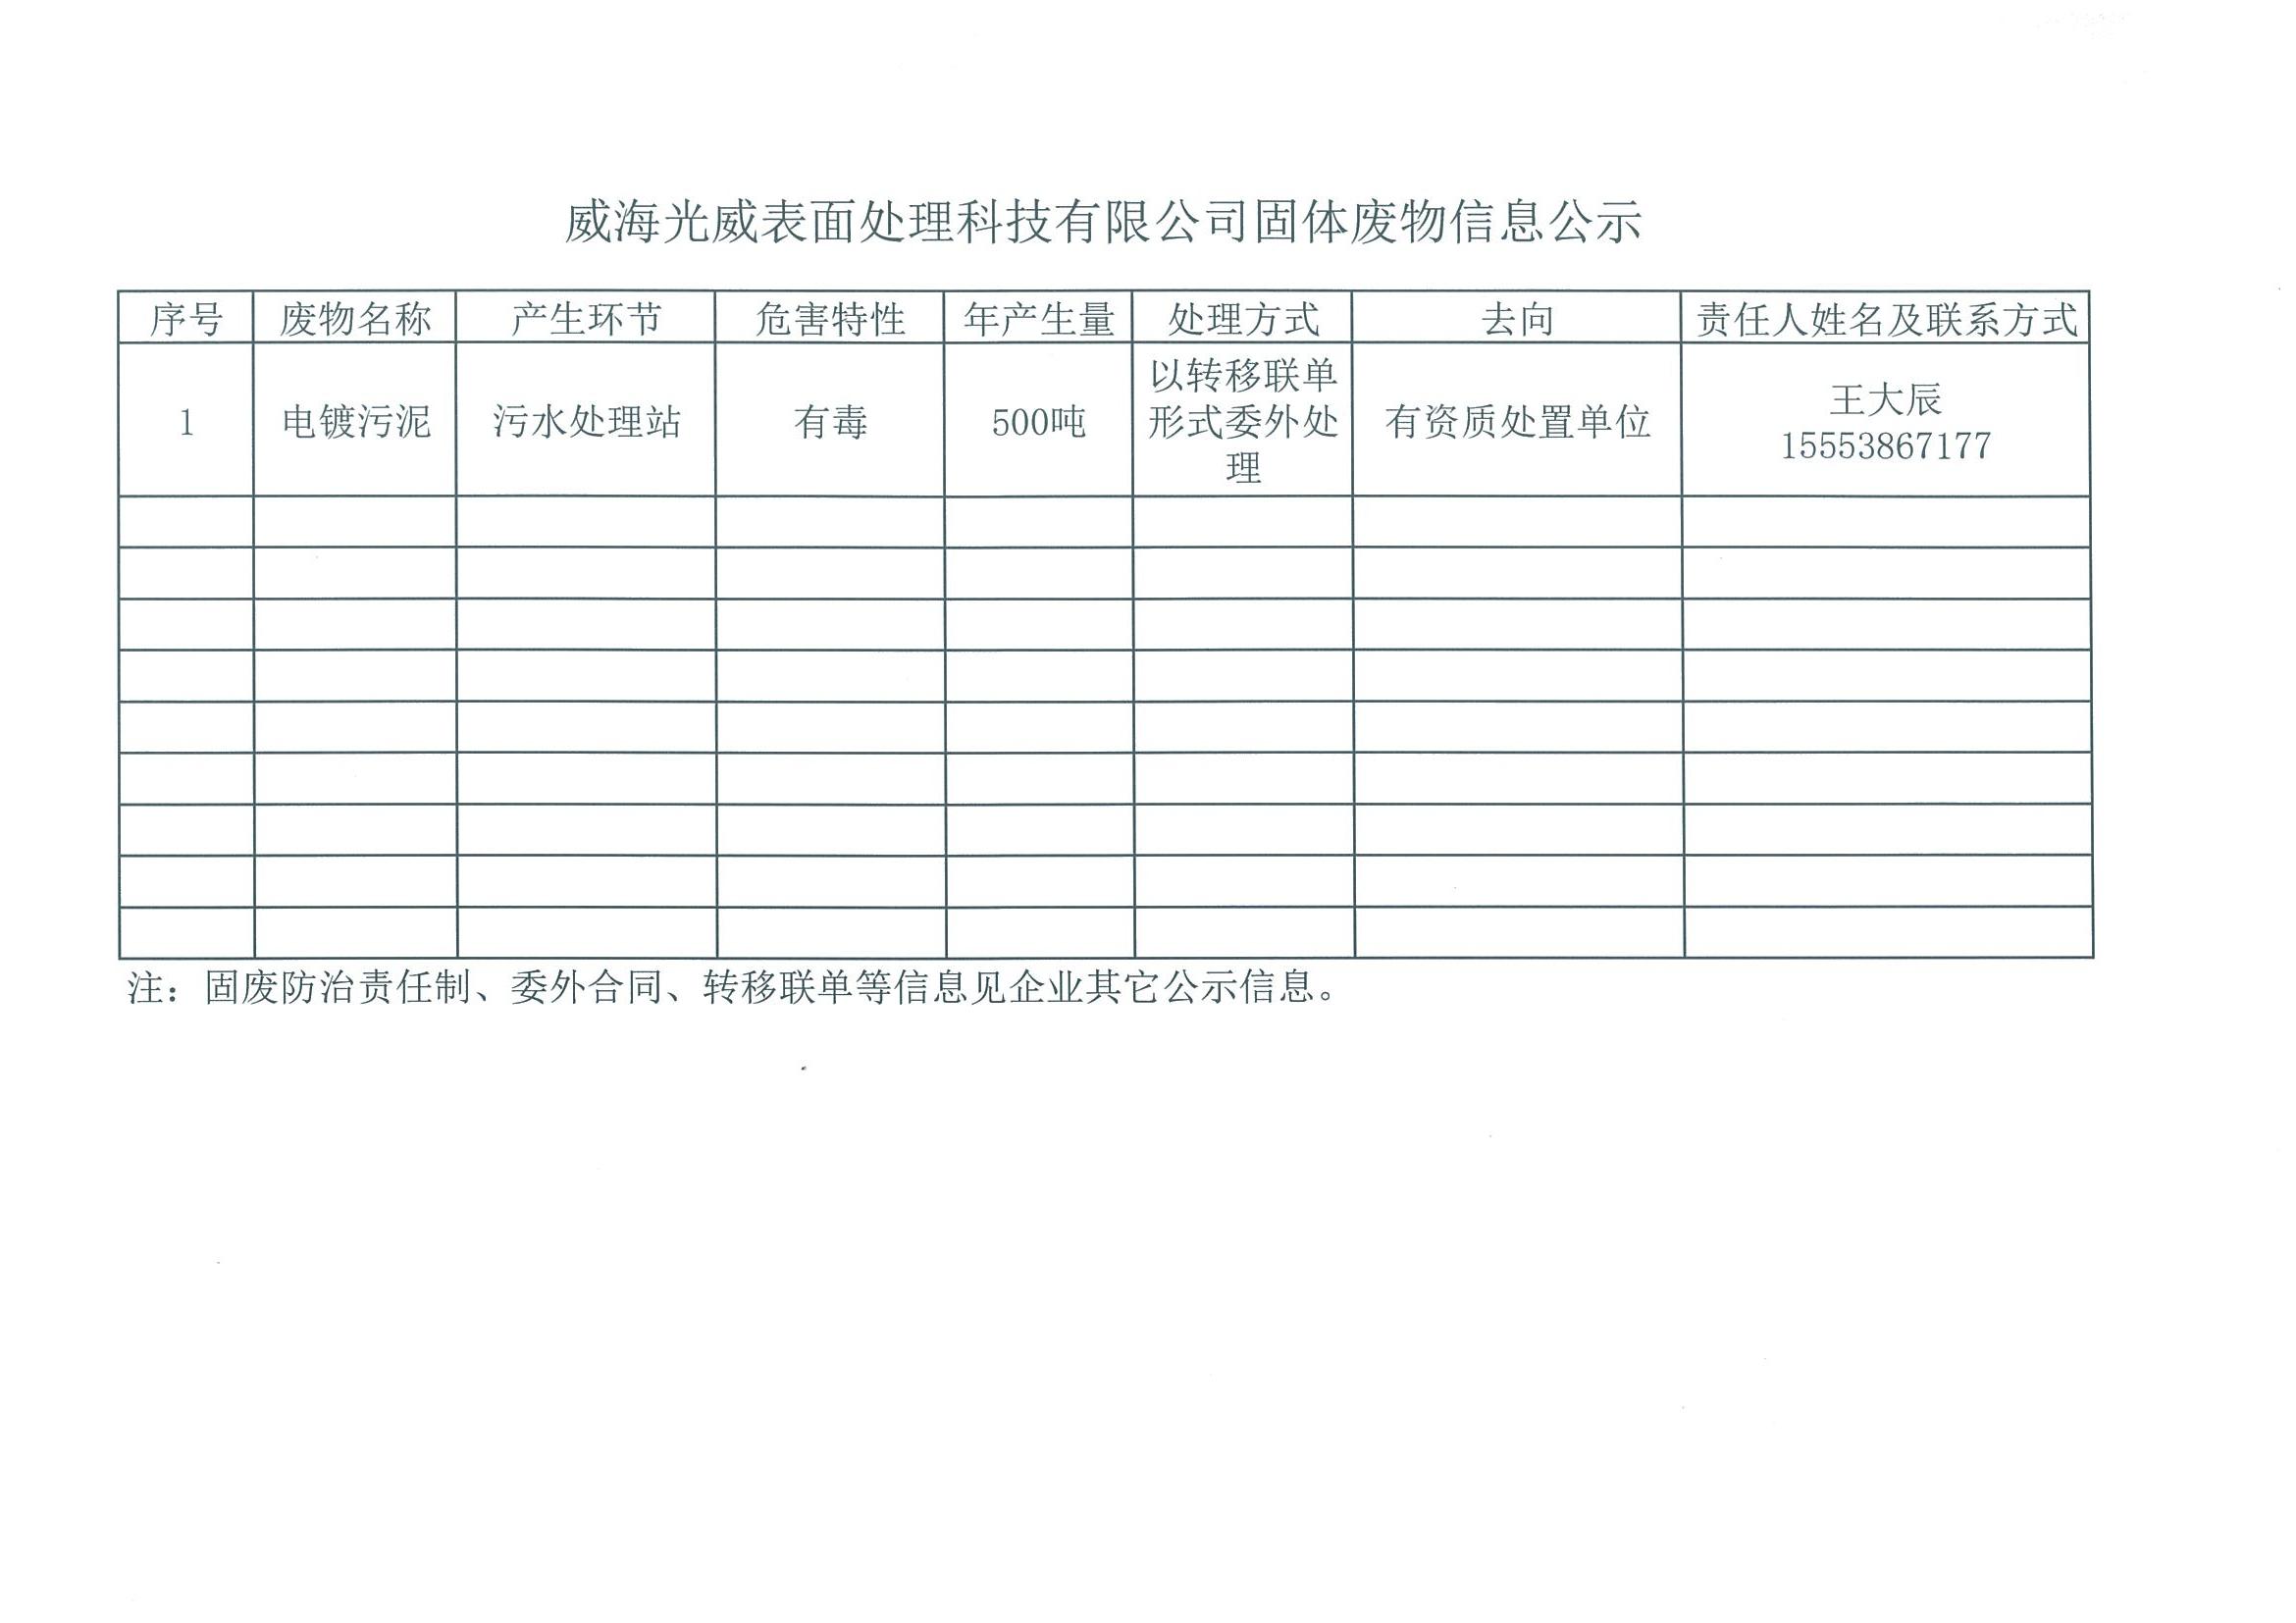 Announcement | Weihai Guangwei Surface Treatment Technology Co., Ltd. solid waste information announcement